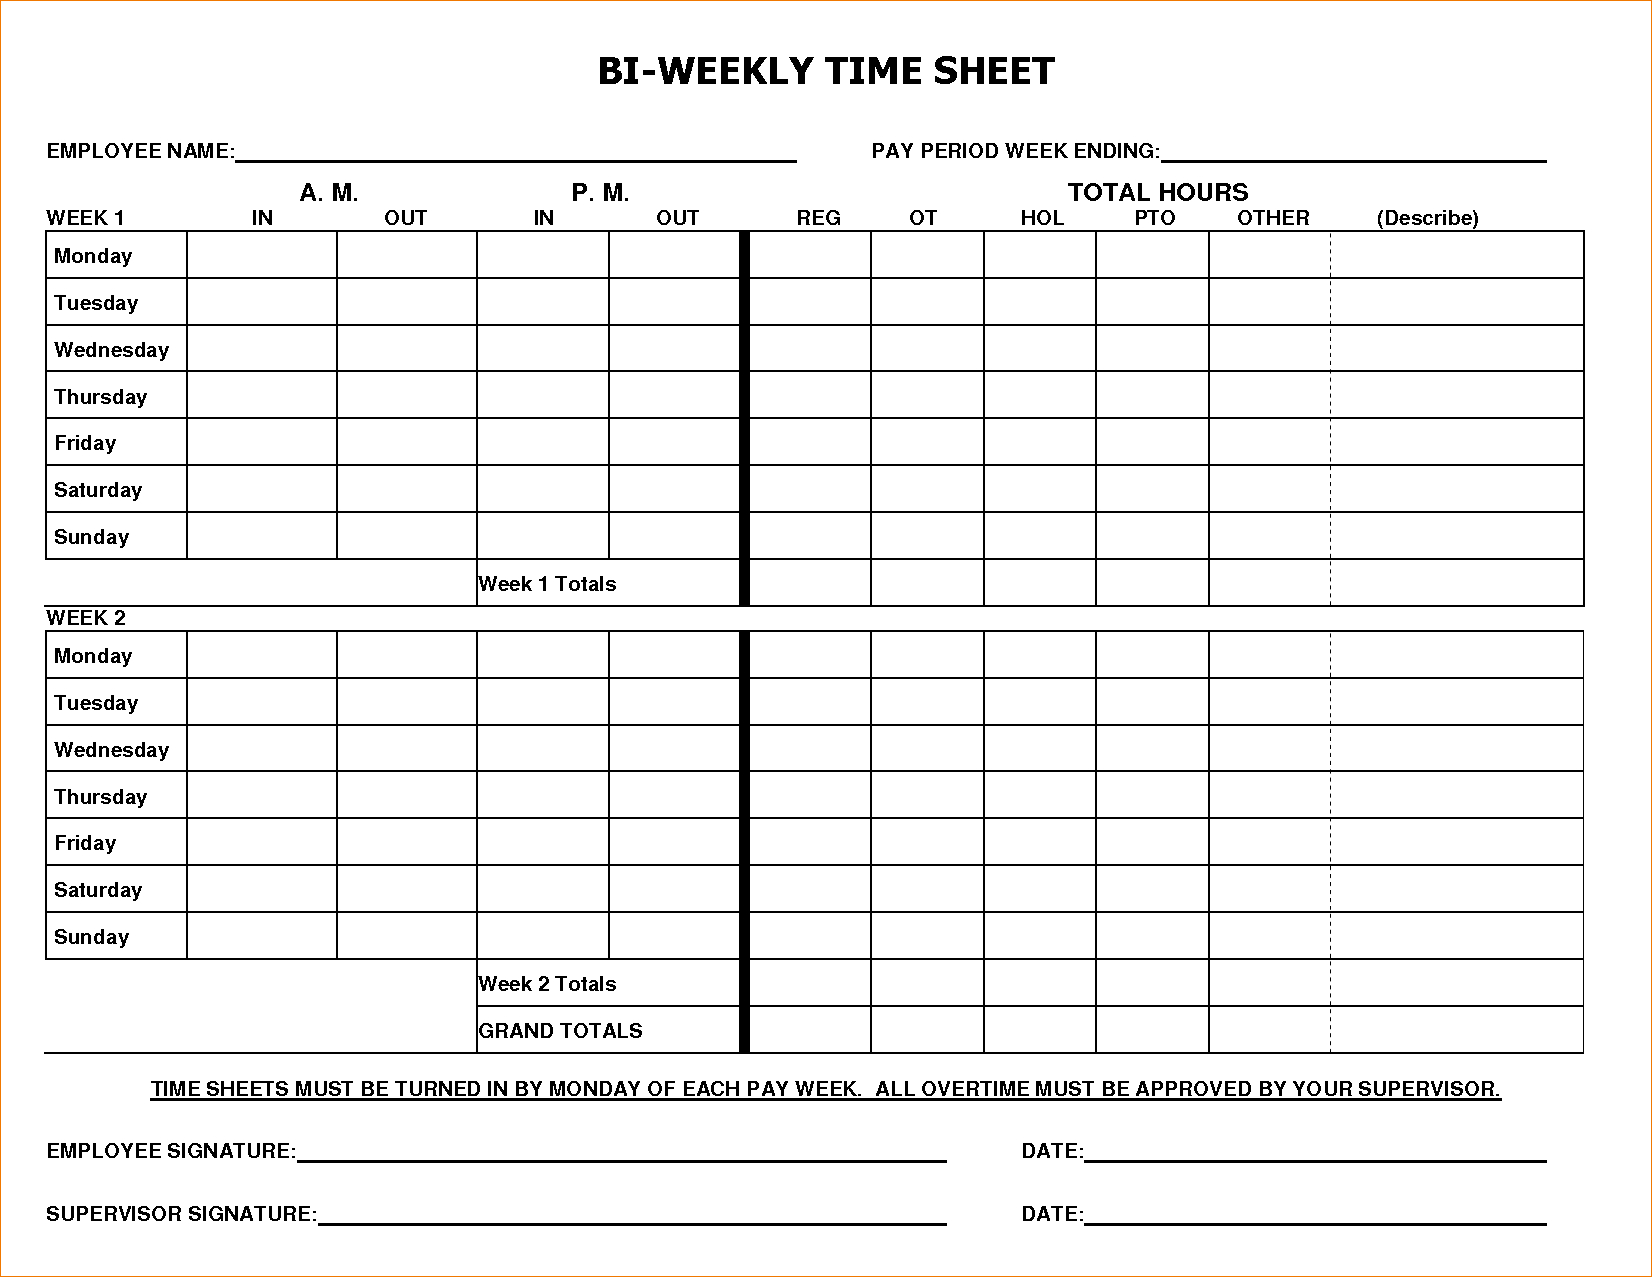 weekly-timesheet-spreadsheet-regarding-times-sheet-template-and-8-bi